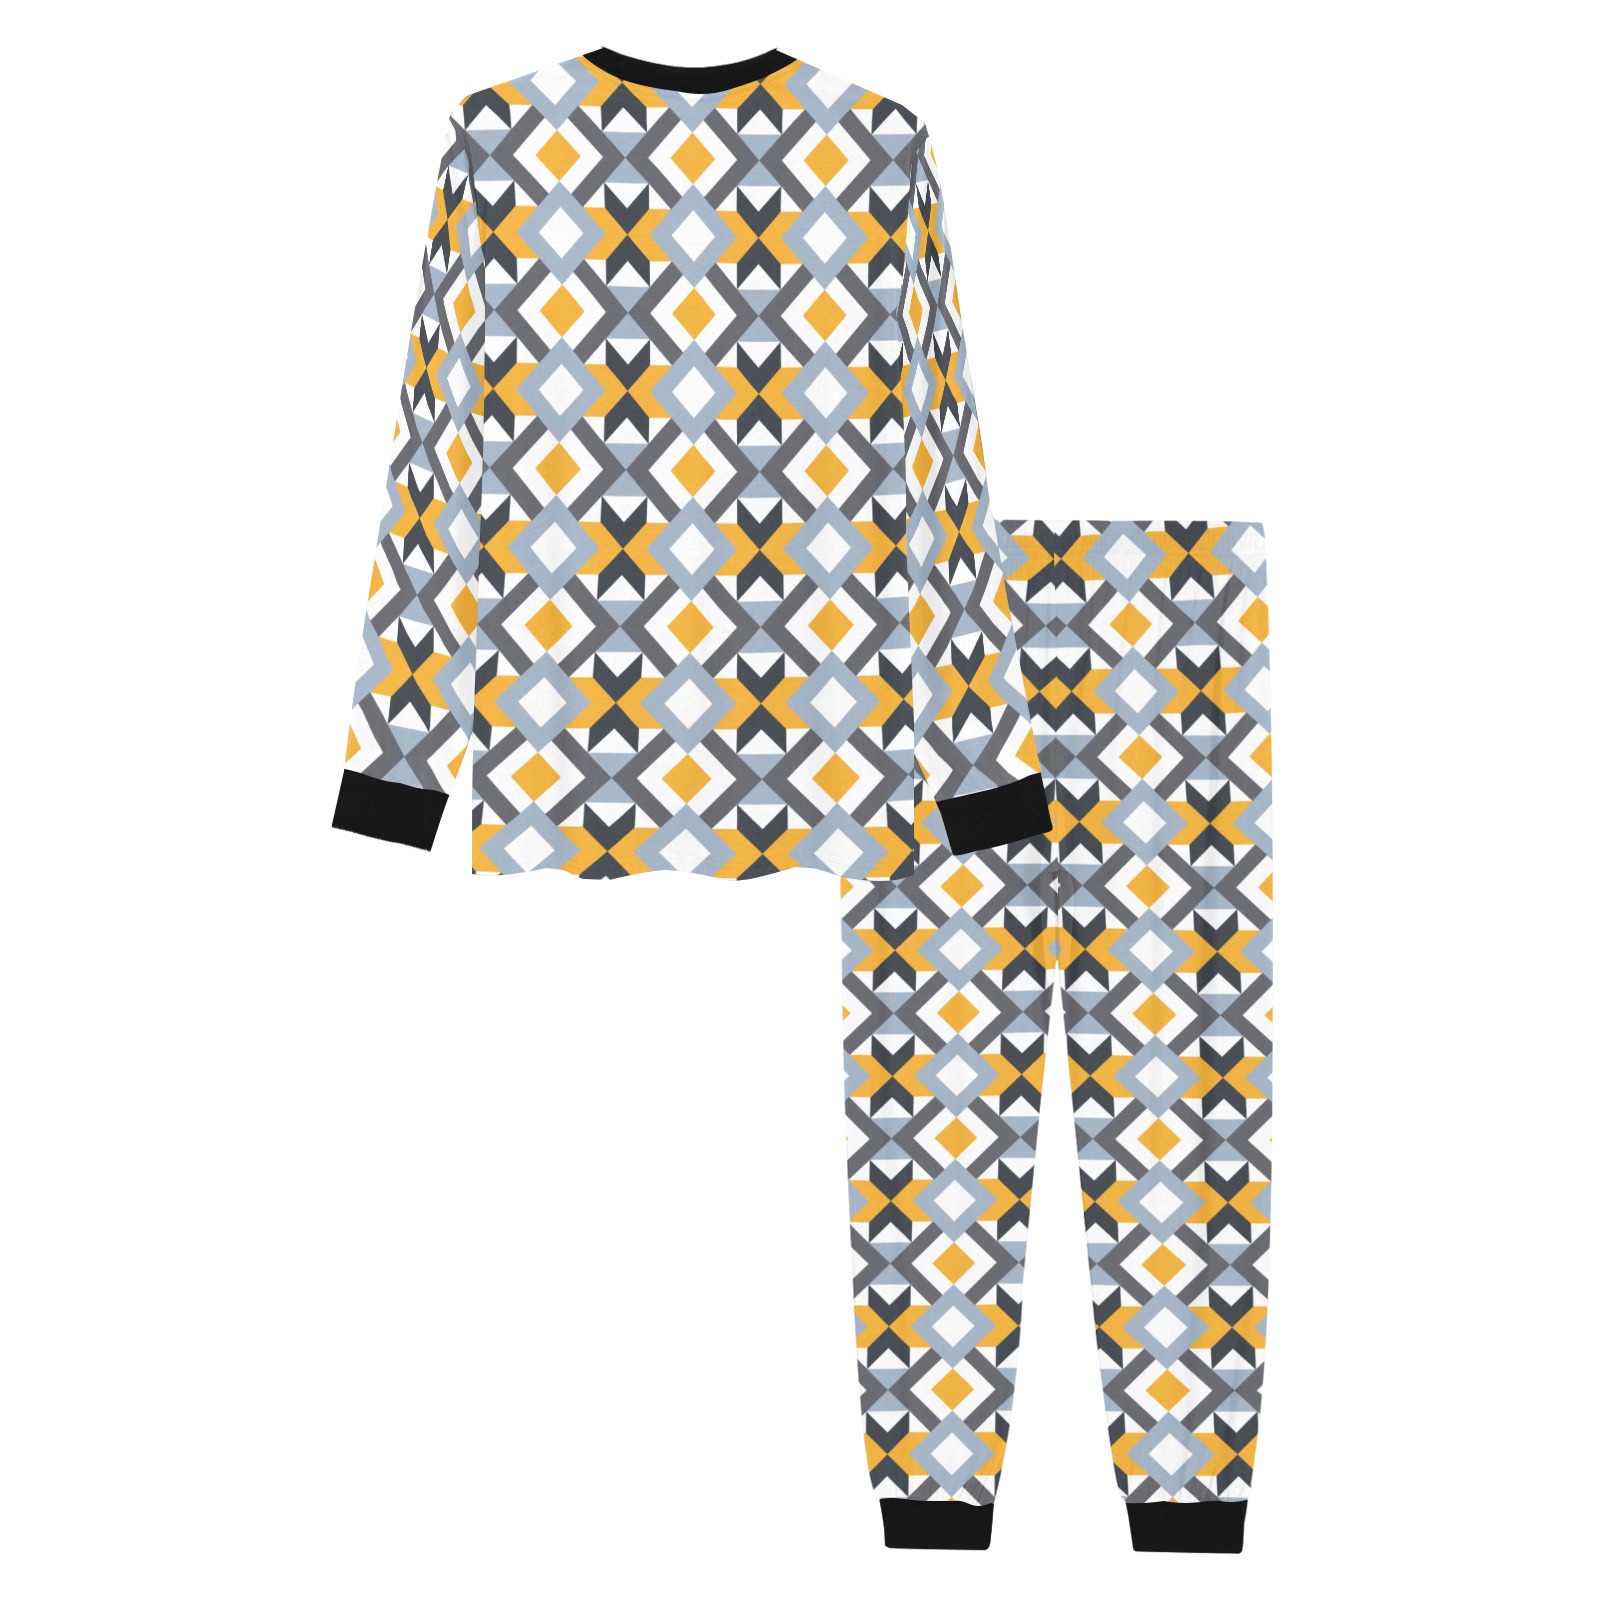 Retro Angles Abstract Geometric Pattern Men's All Over Print Pajama Set